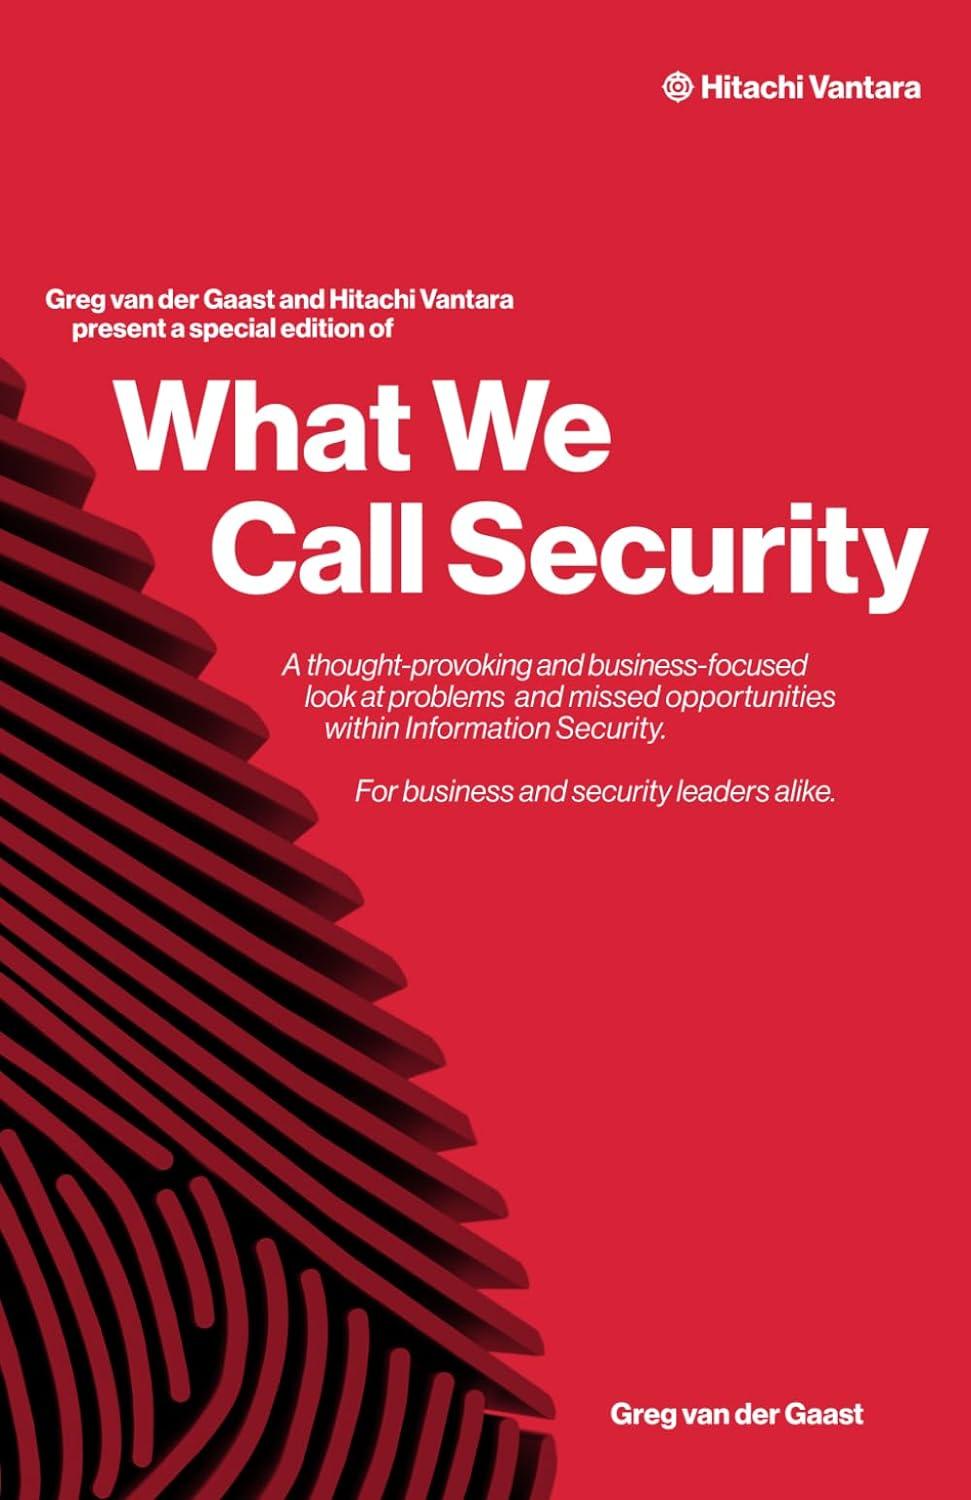 what we call security 1st edition greg van der gaast b0chl7r149, 979-8854413015